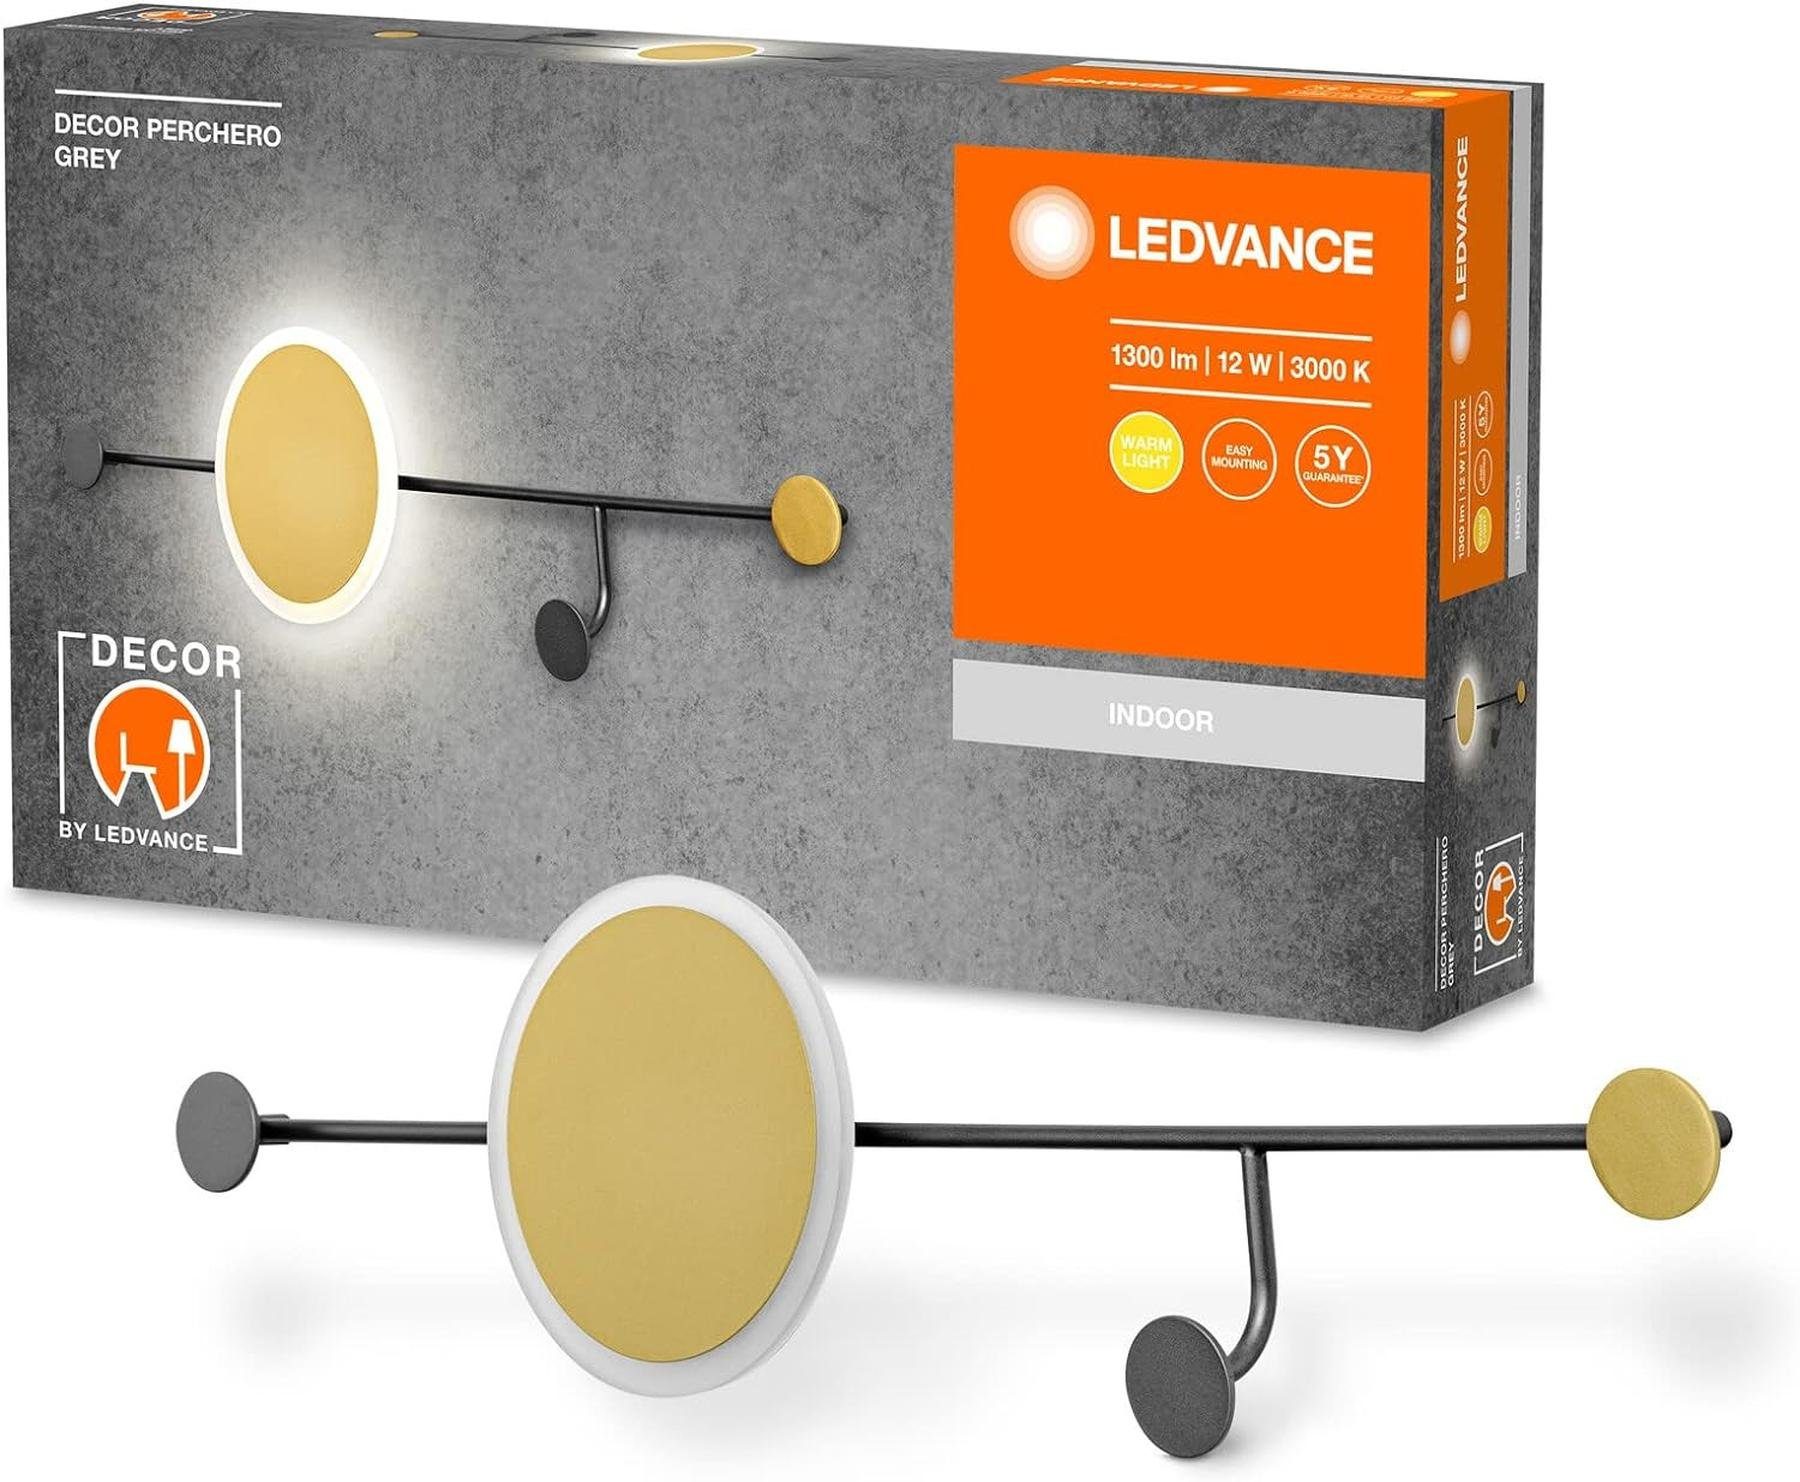 Ledvance LED Wandleuchte LEDVANCE DECOR Perchero Garderobenhaken770mm,grau,kombinierte Nutzung, warmweißer, Energieeffizient